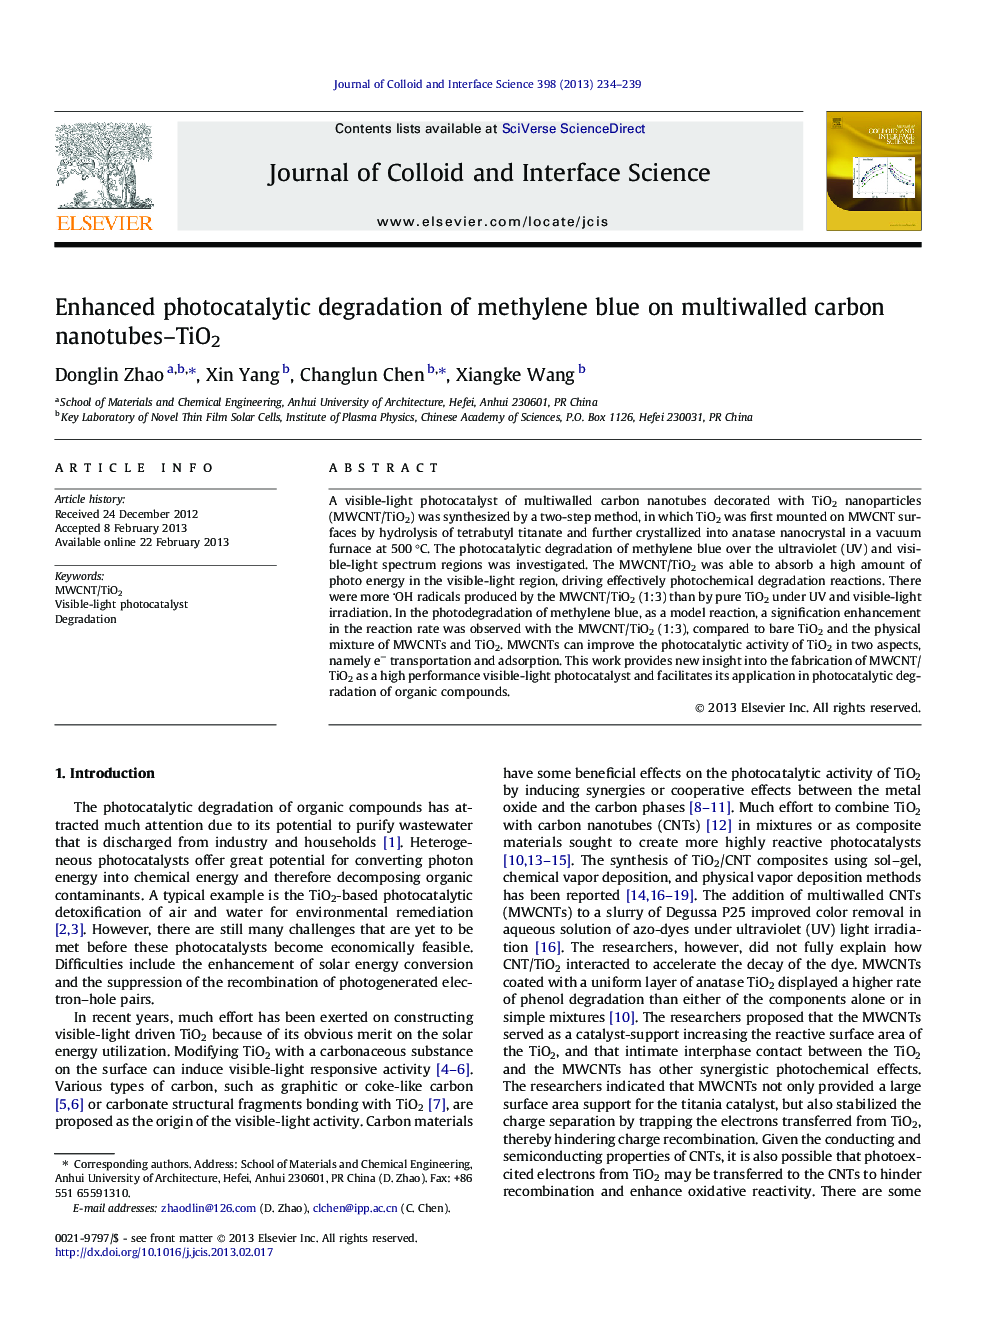 Enhanced photocatalytic degradation of methylene blue on multiwalled carbon nanotubes–TiO2